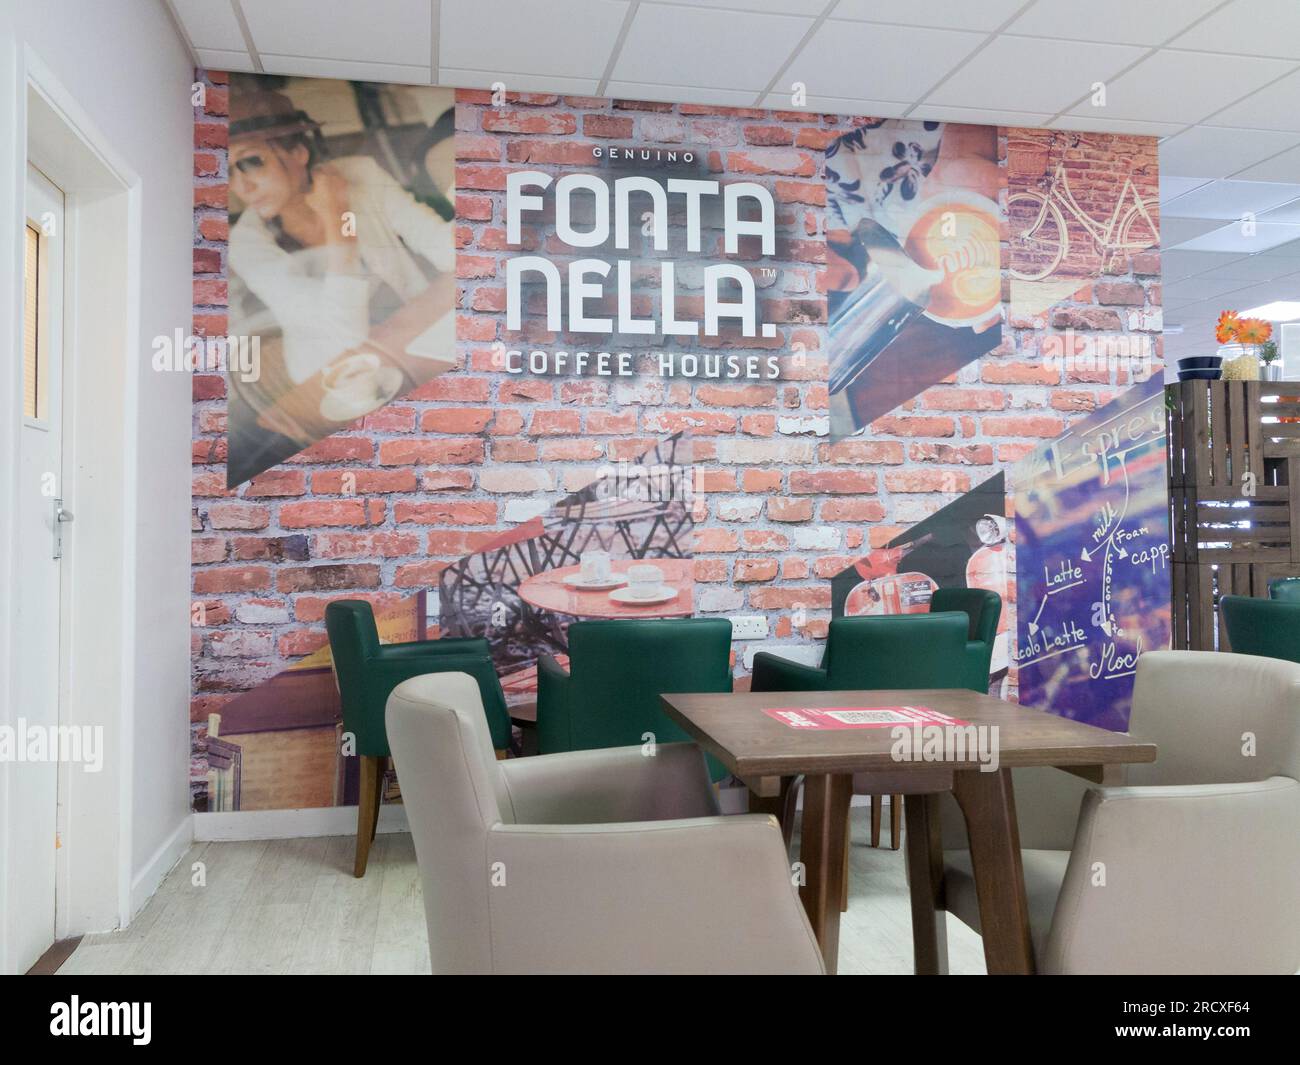 Fontanella coffee house, London, UK Stock Photo